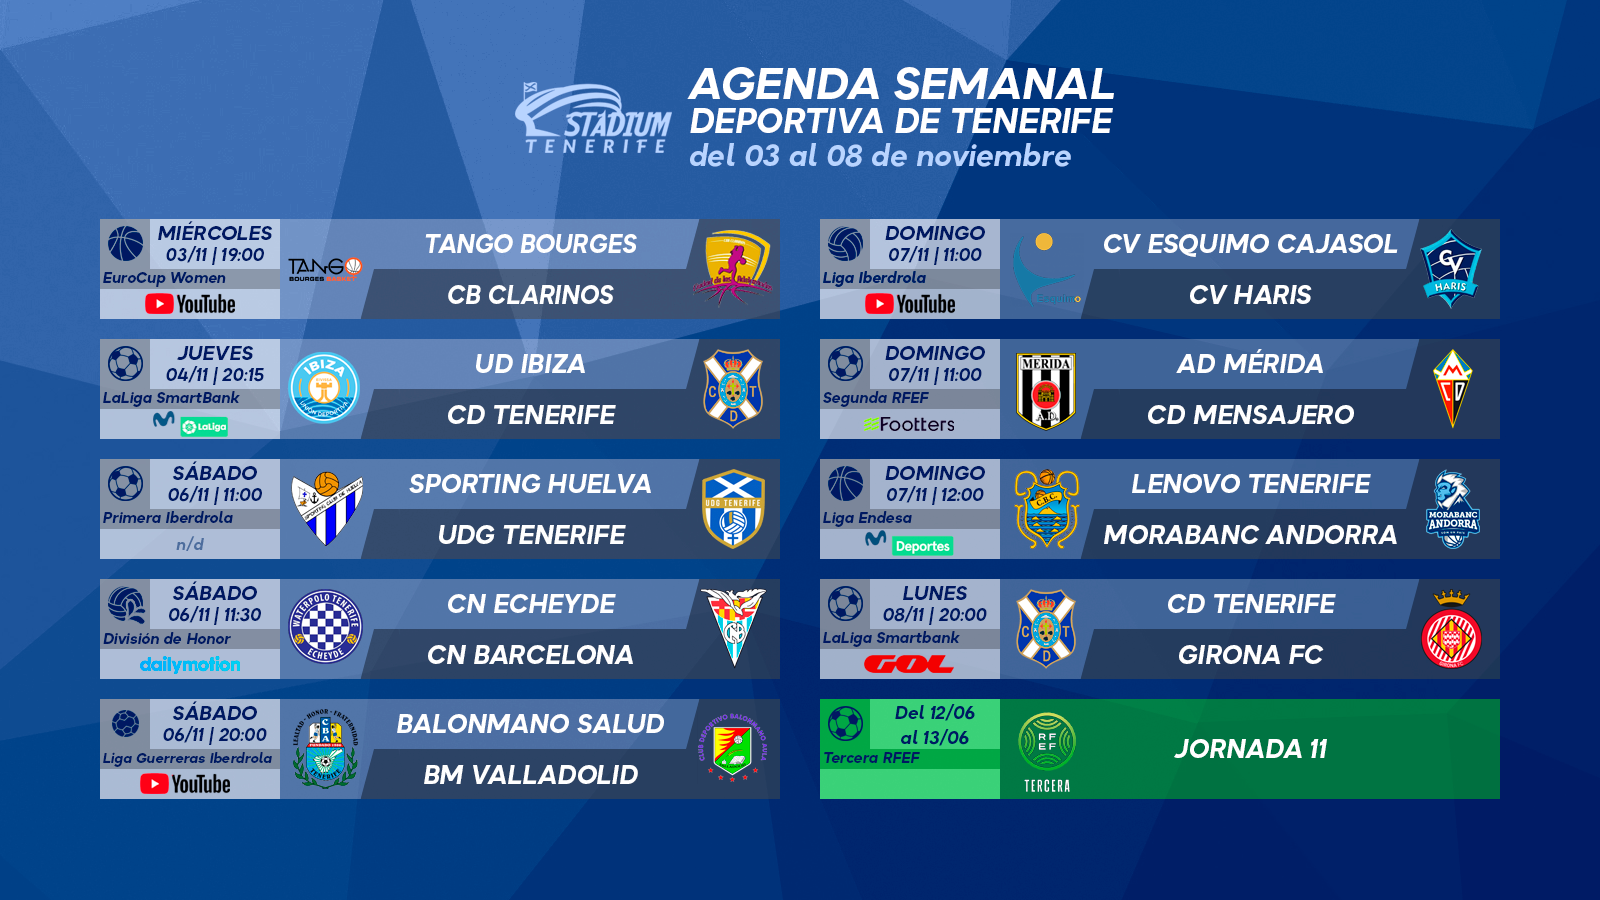 Agenda Semanal Deportiva de Tenerife (2 al 8 de noviembre)